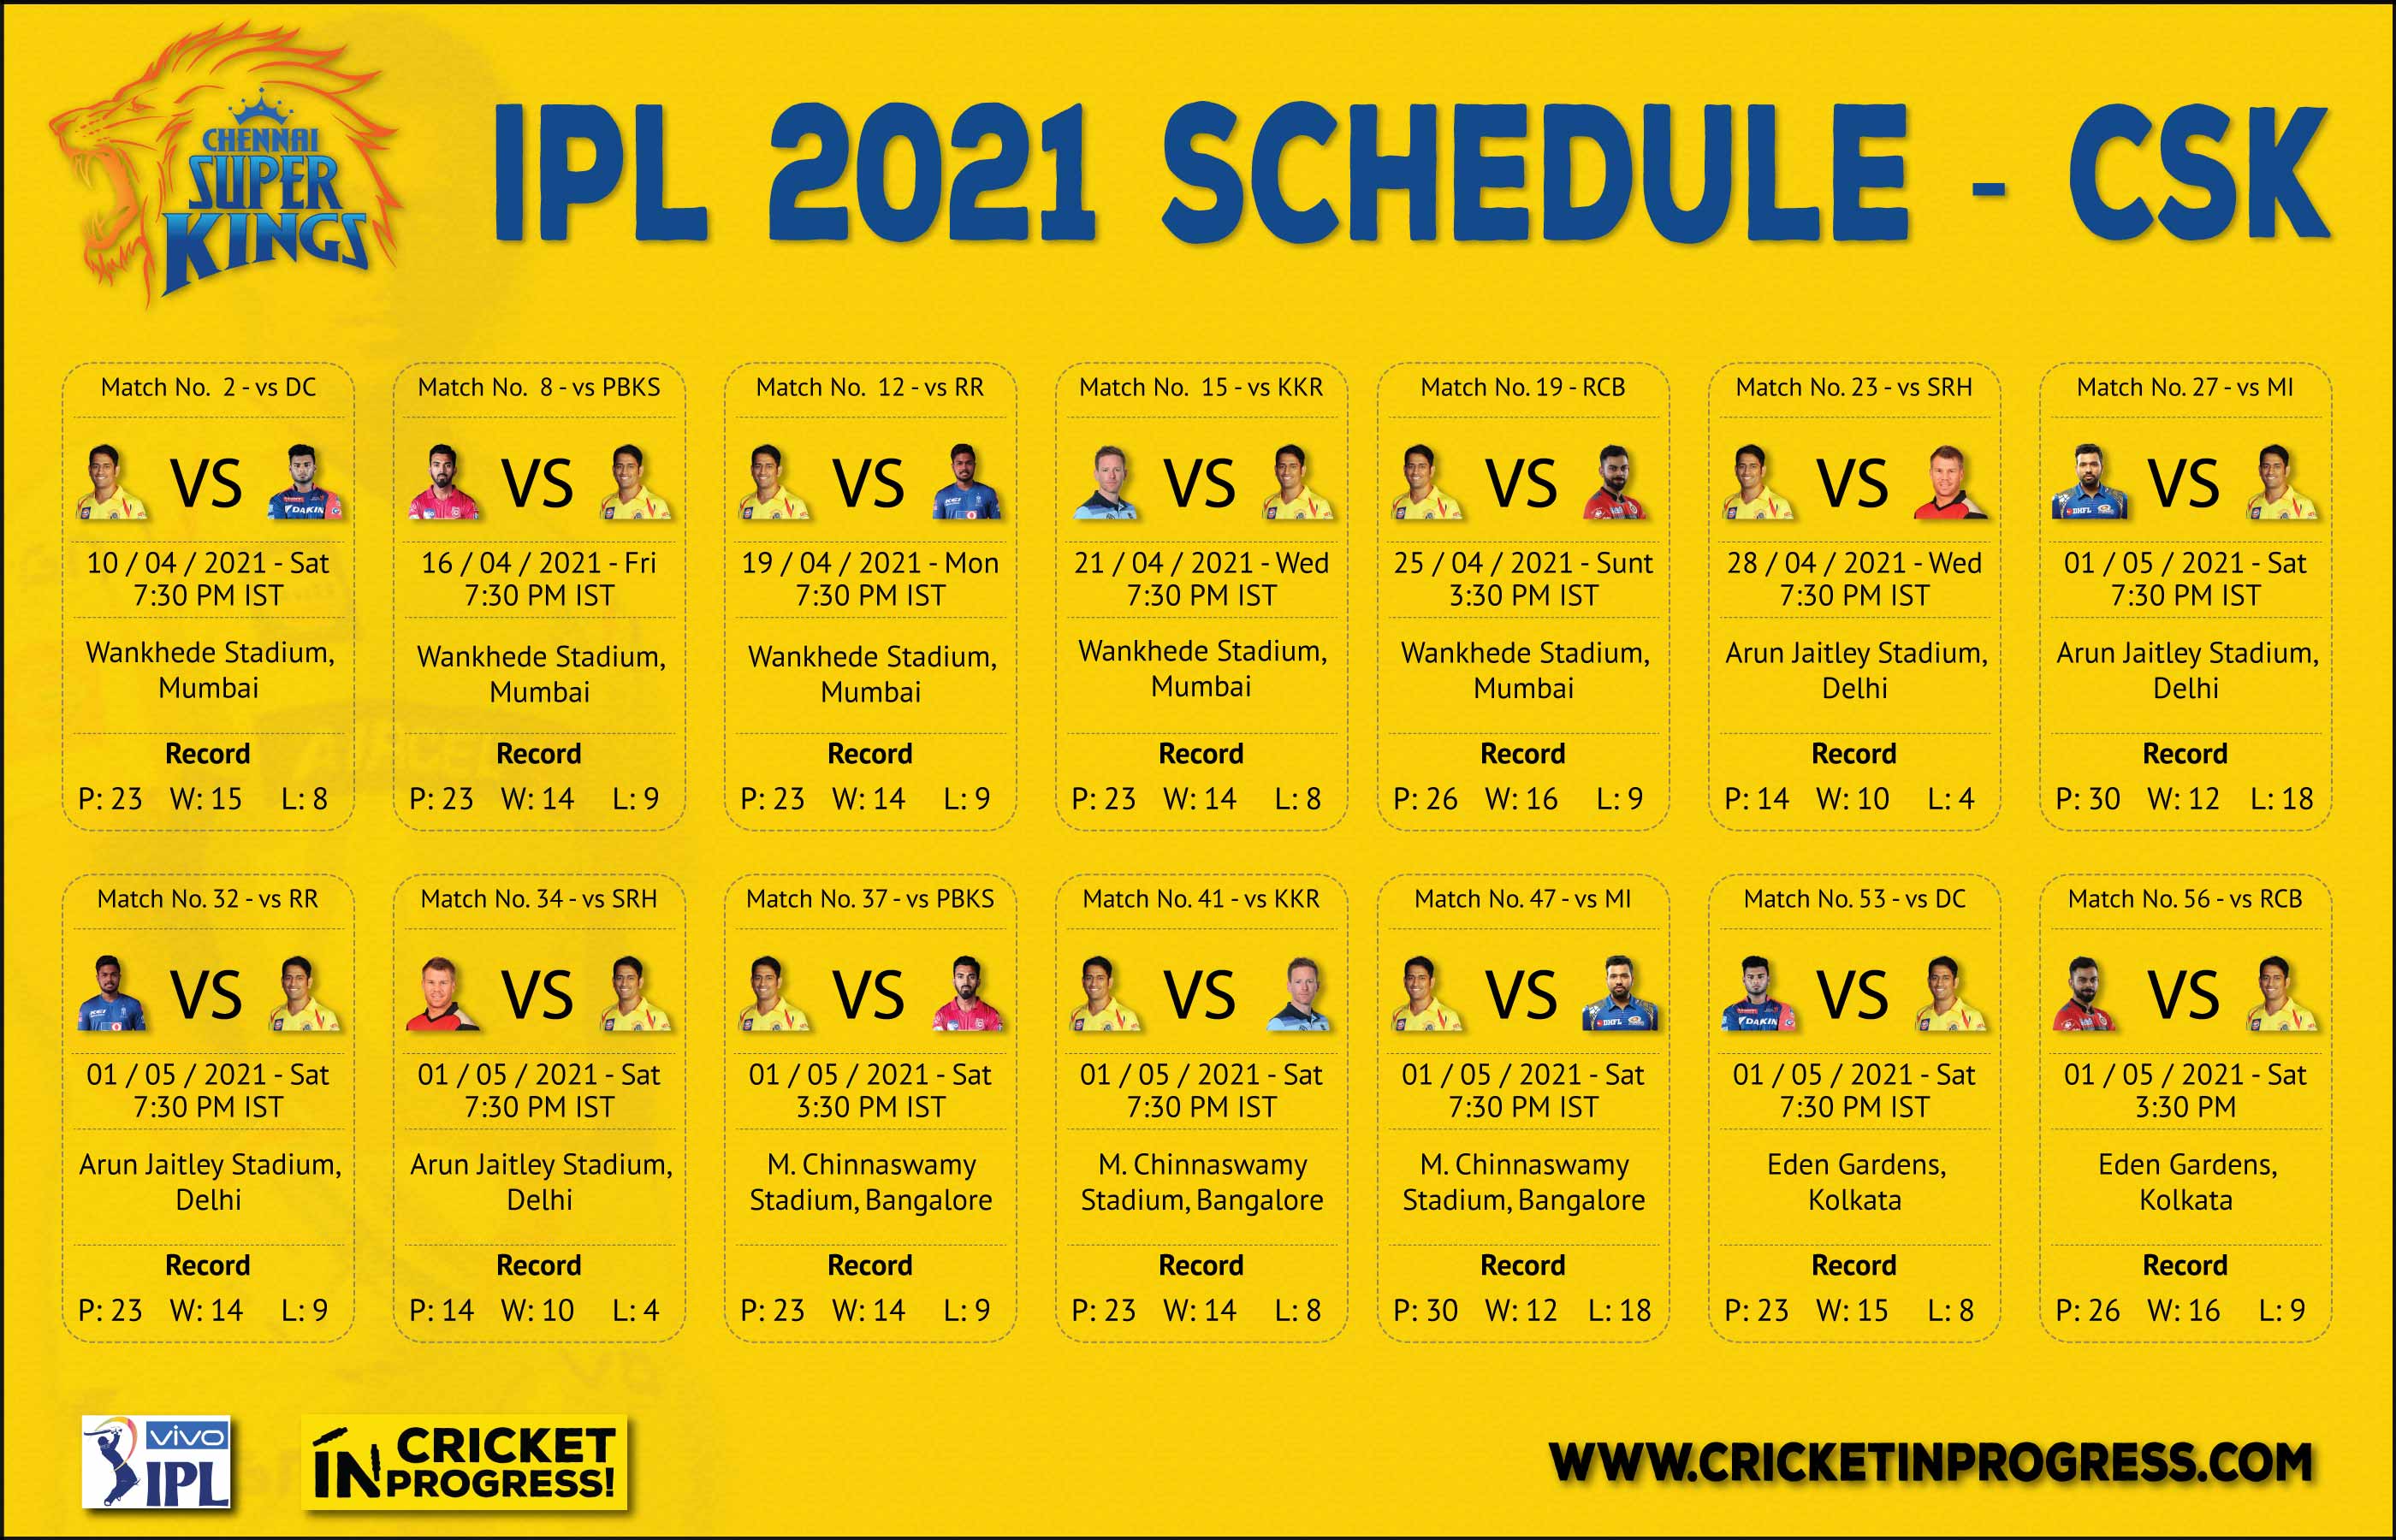 IPL 2021 CSK Schedule